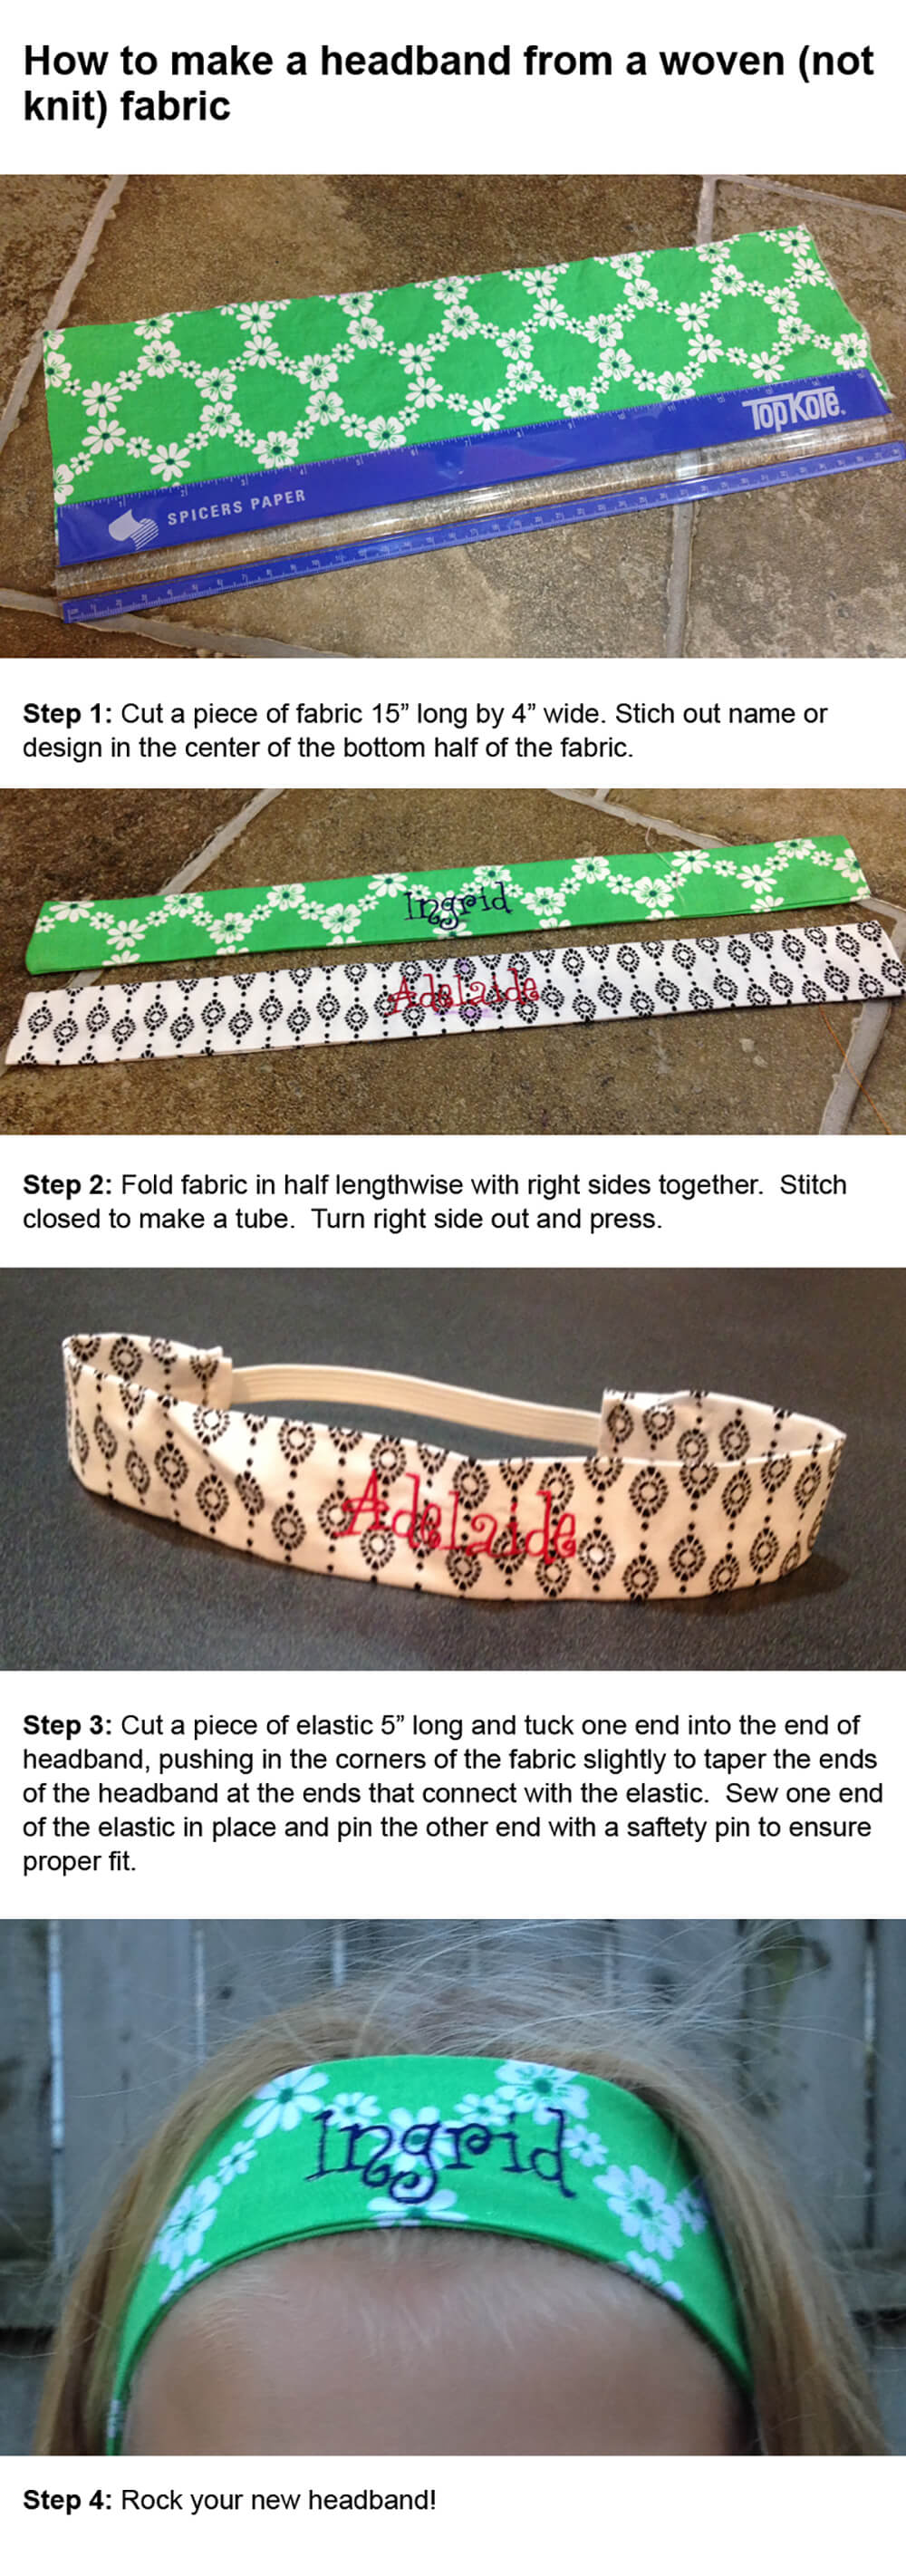 How to make a woven headband.